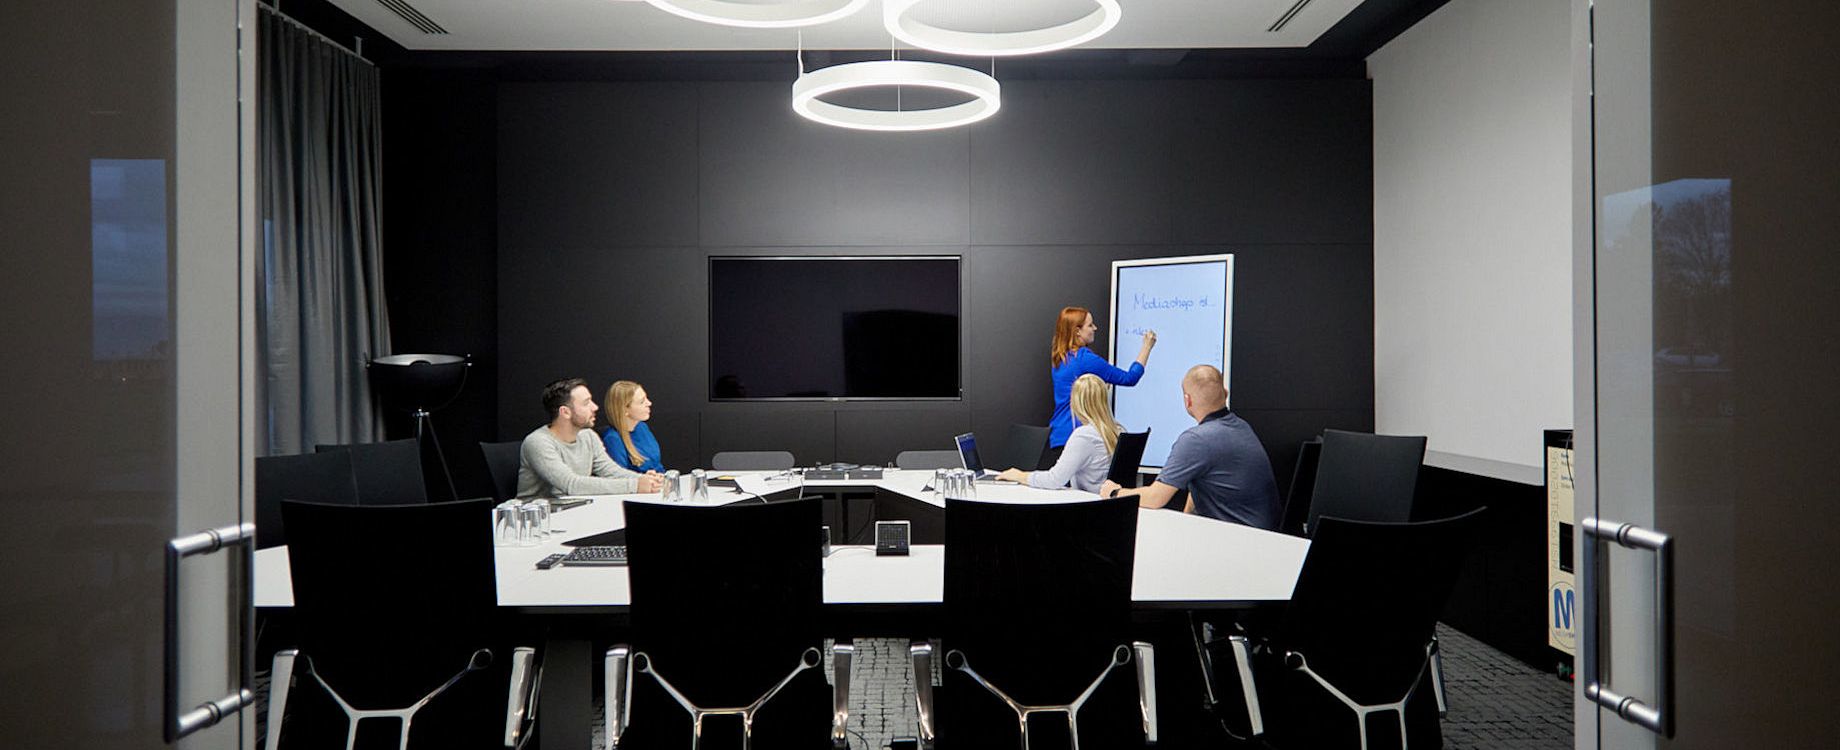 Besprechung im großzügigen Meetingbereich, nicht nur medientechnisch up to date. © M.O.O.CON / Walter Oberbramberger 